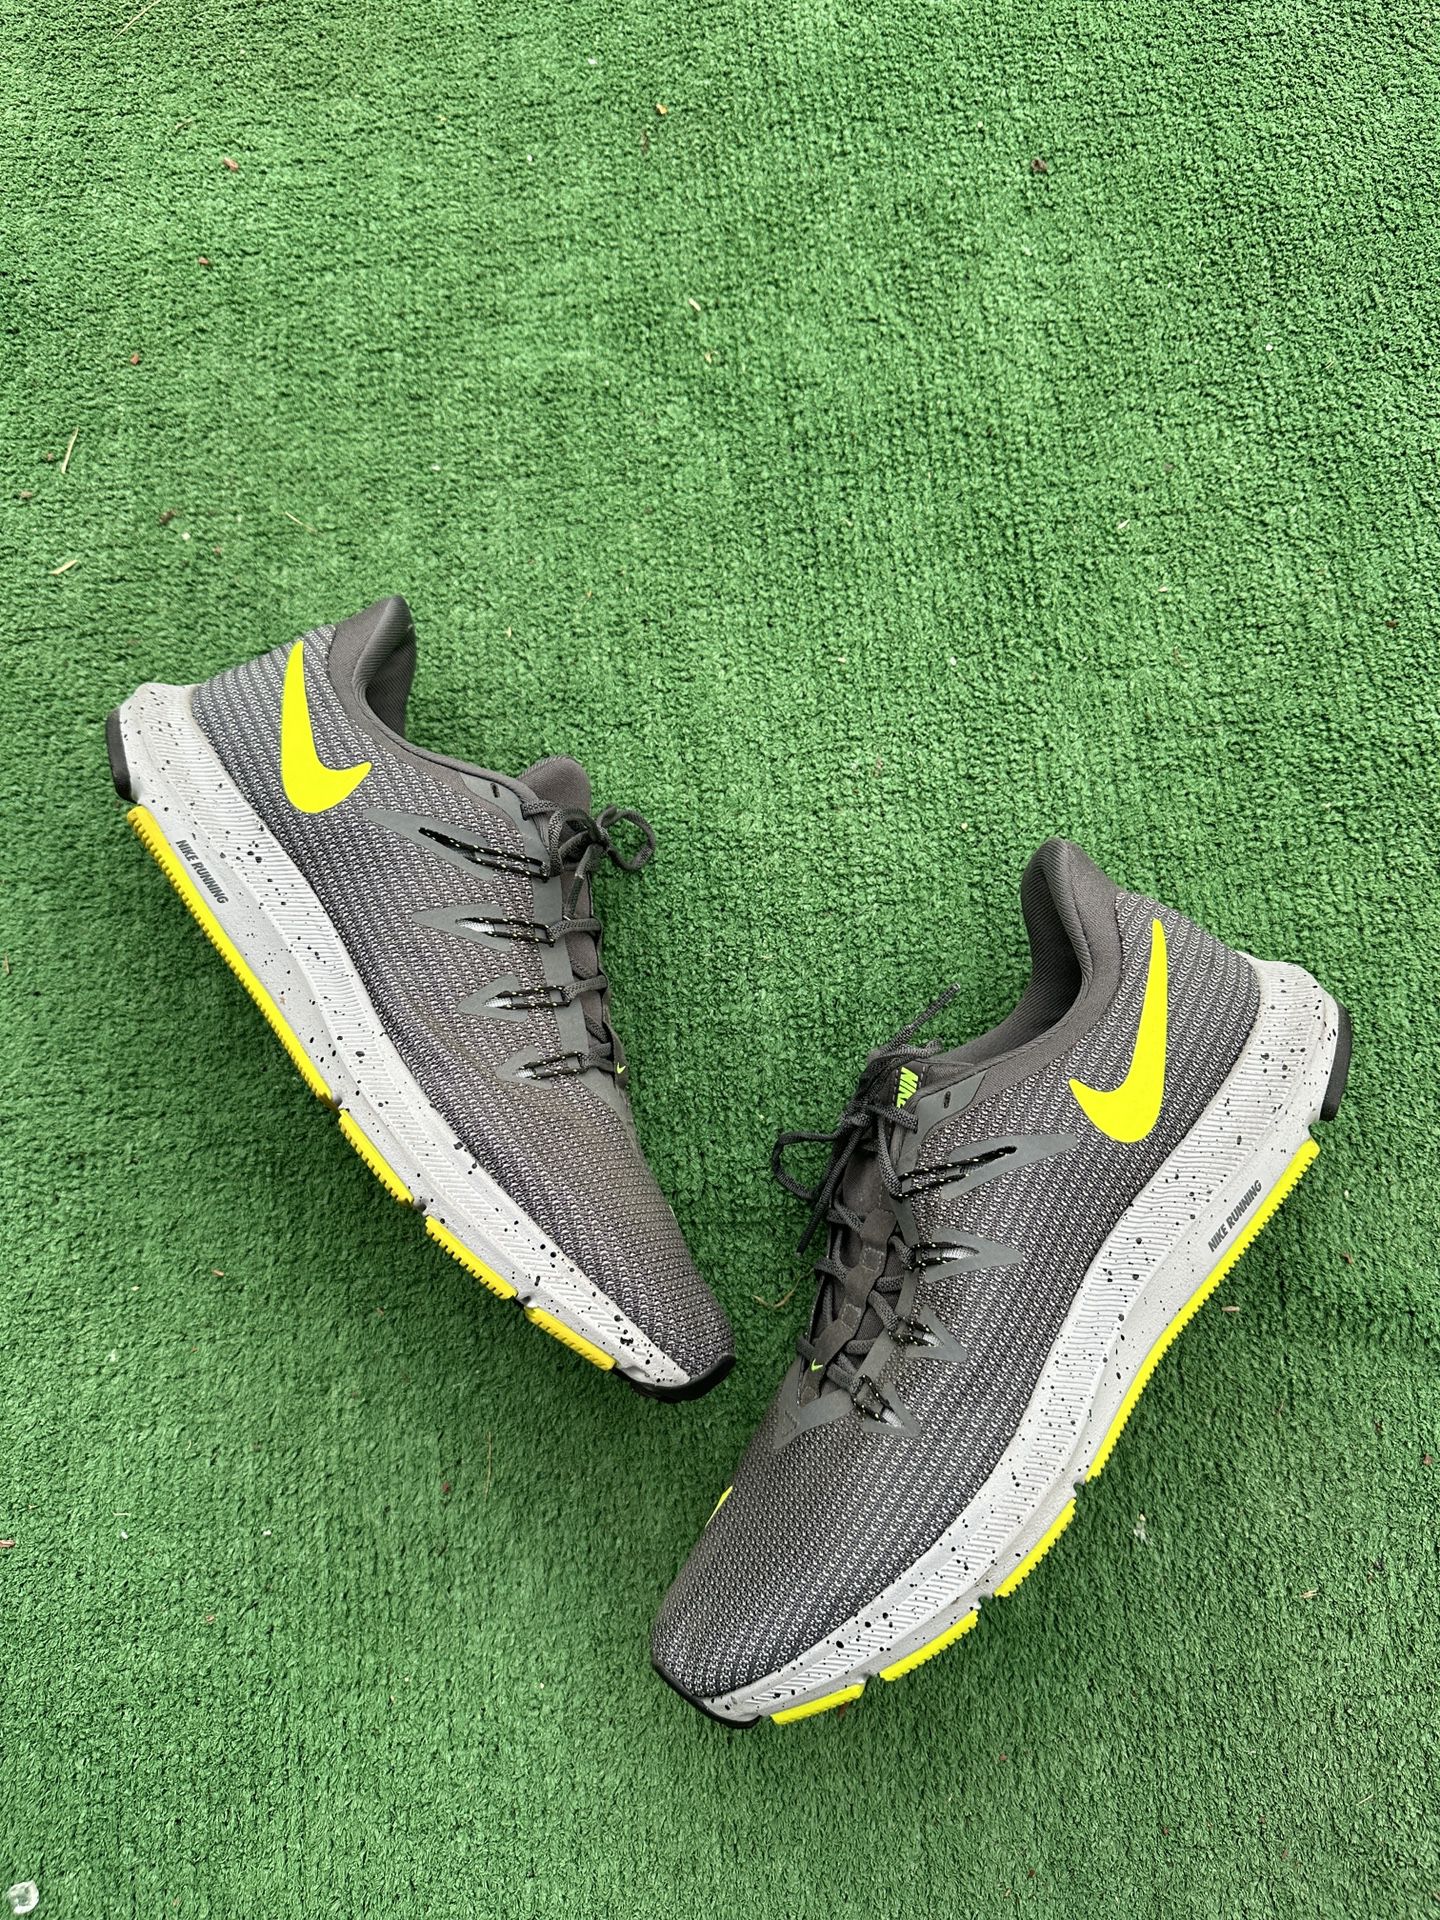 Nike Shoes!